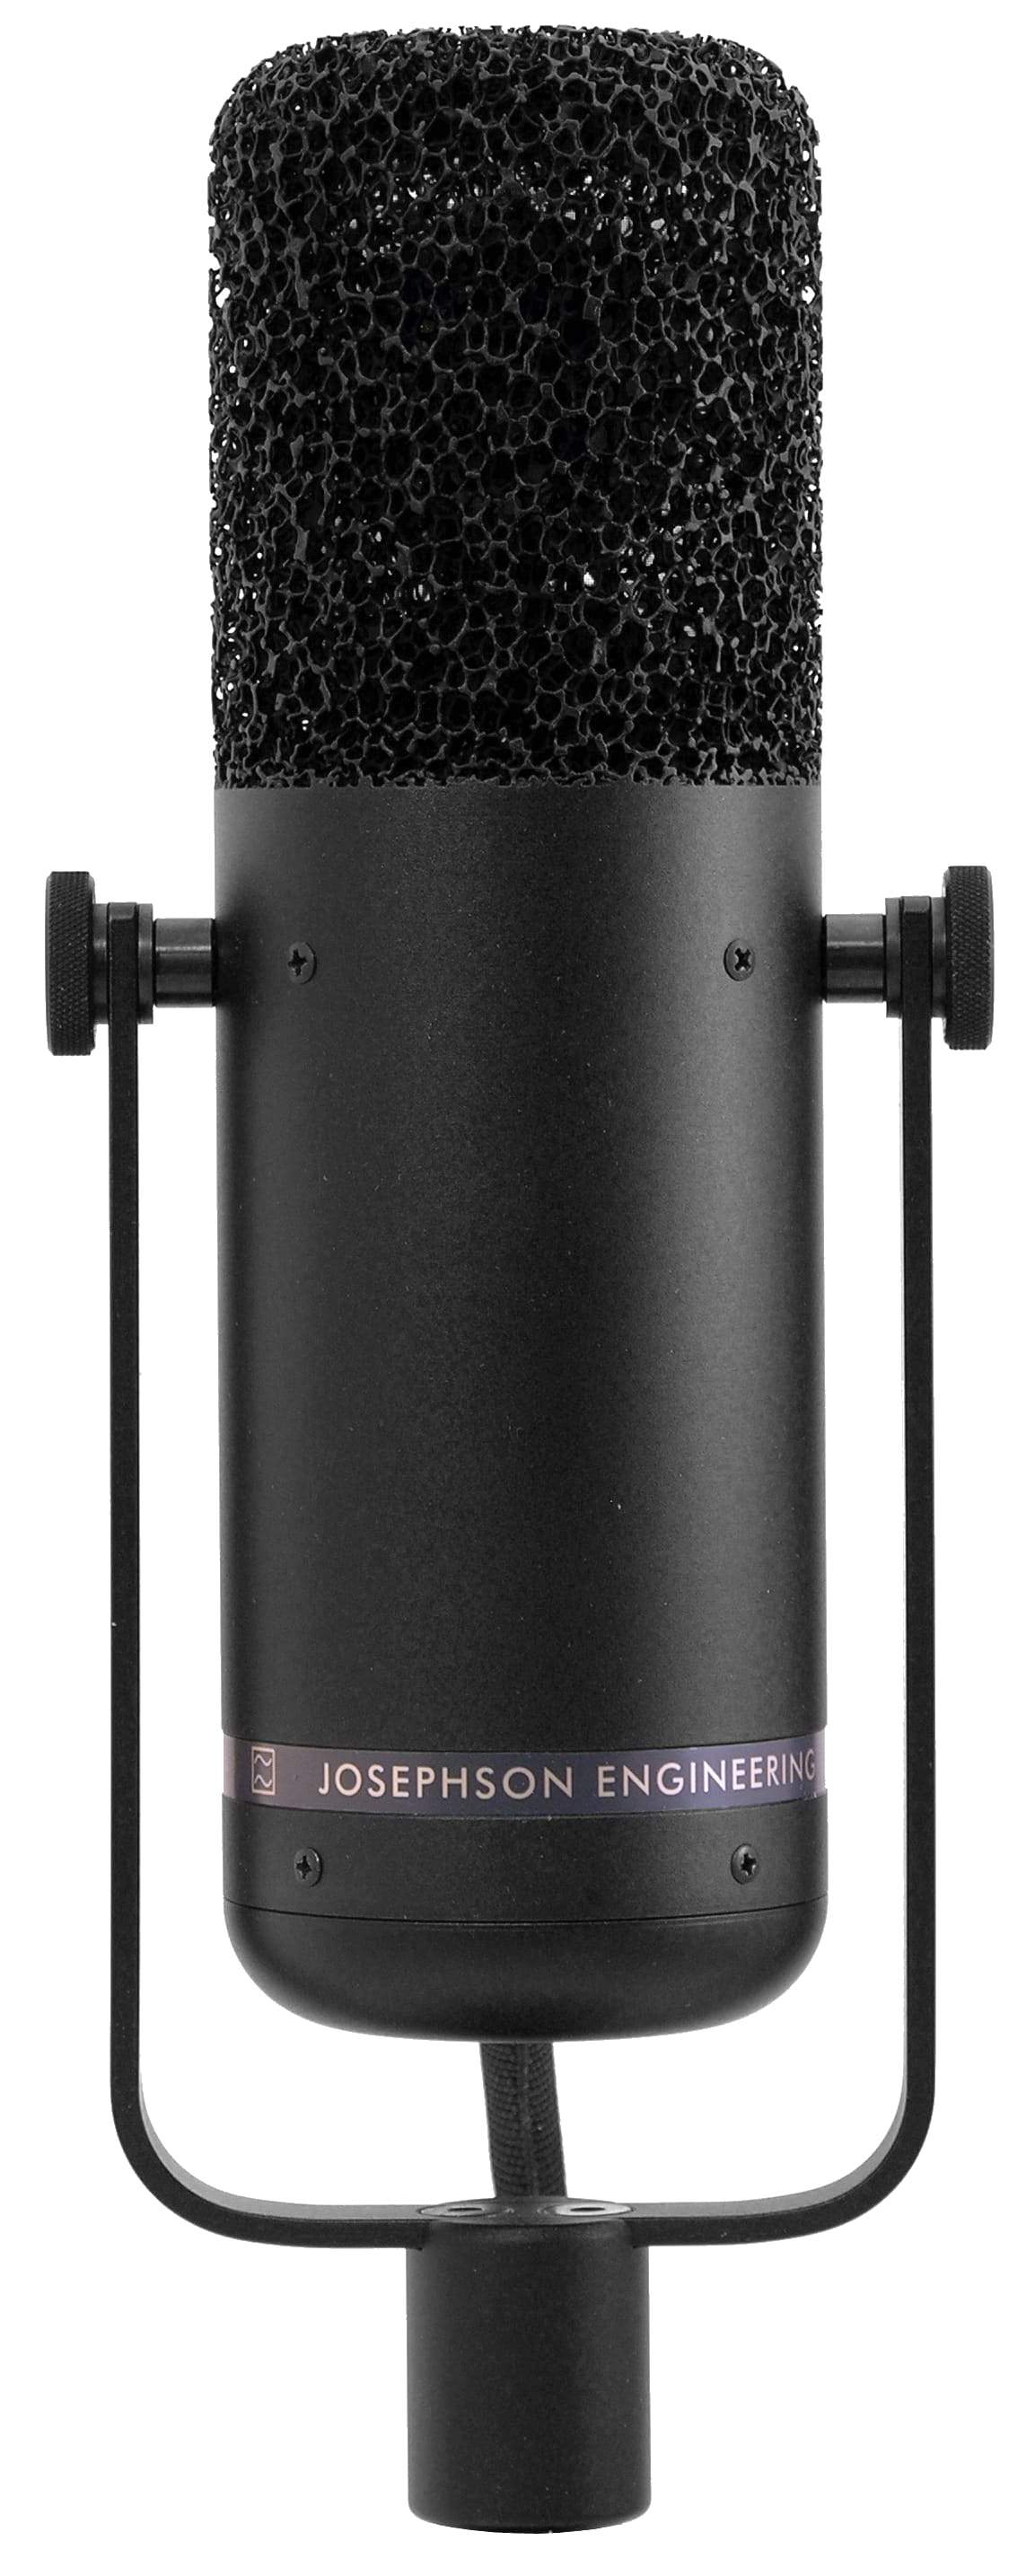 Josephson Engineering C715 - Arda Suppliers